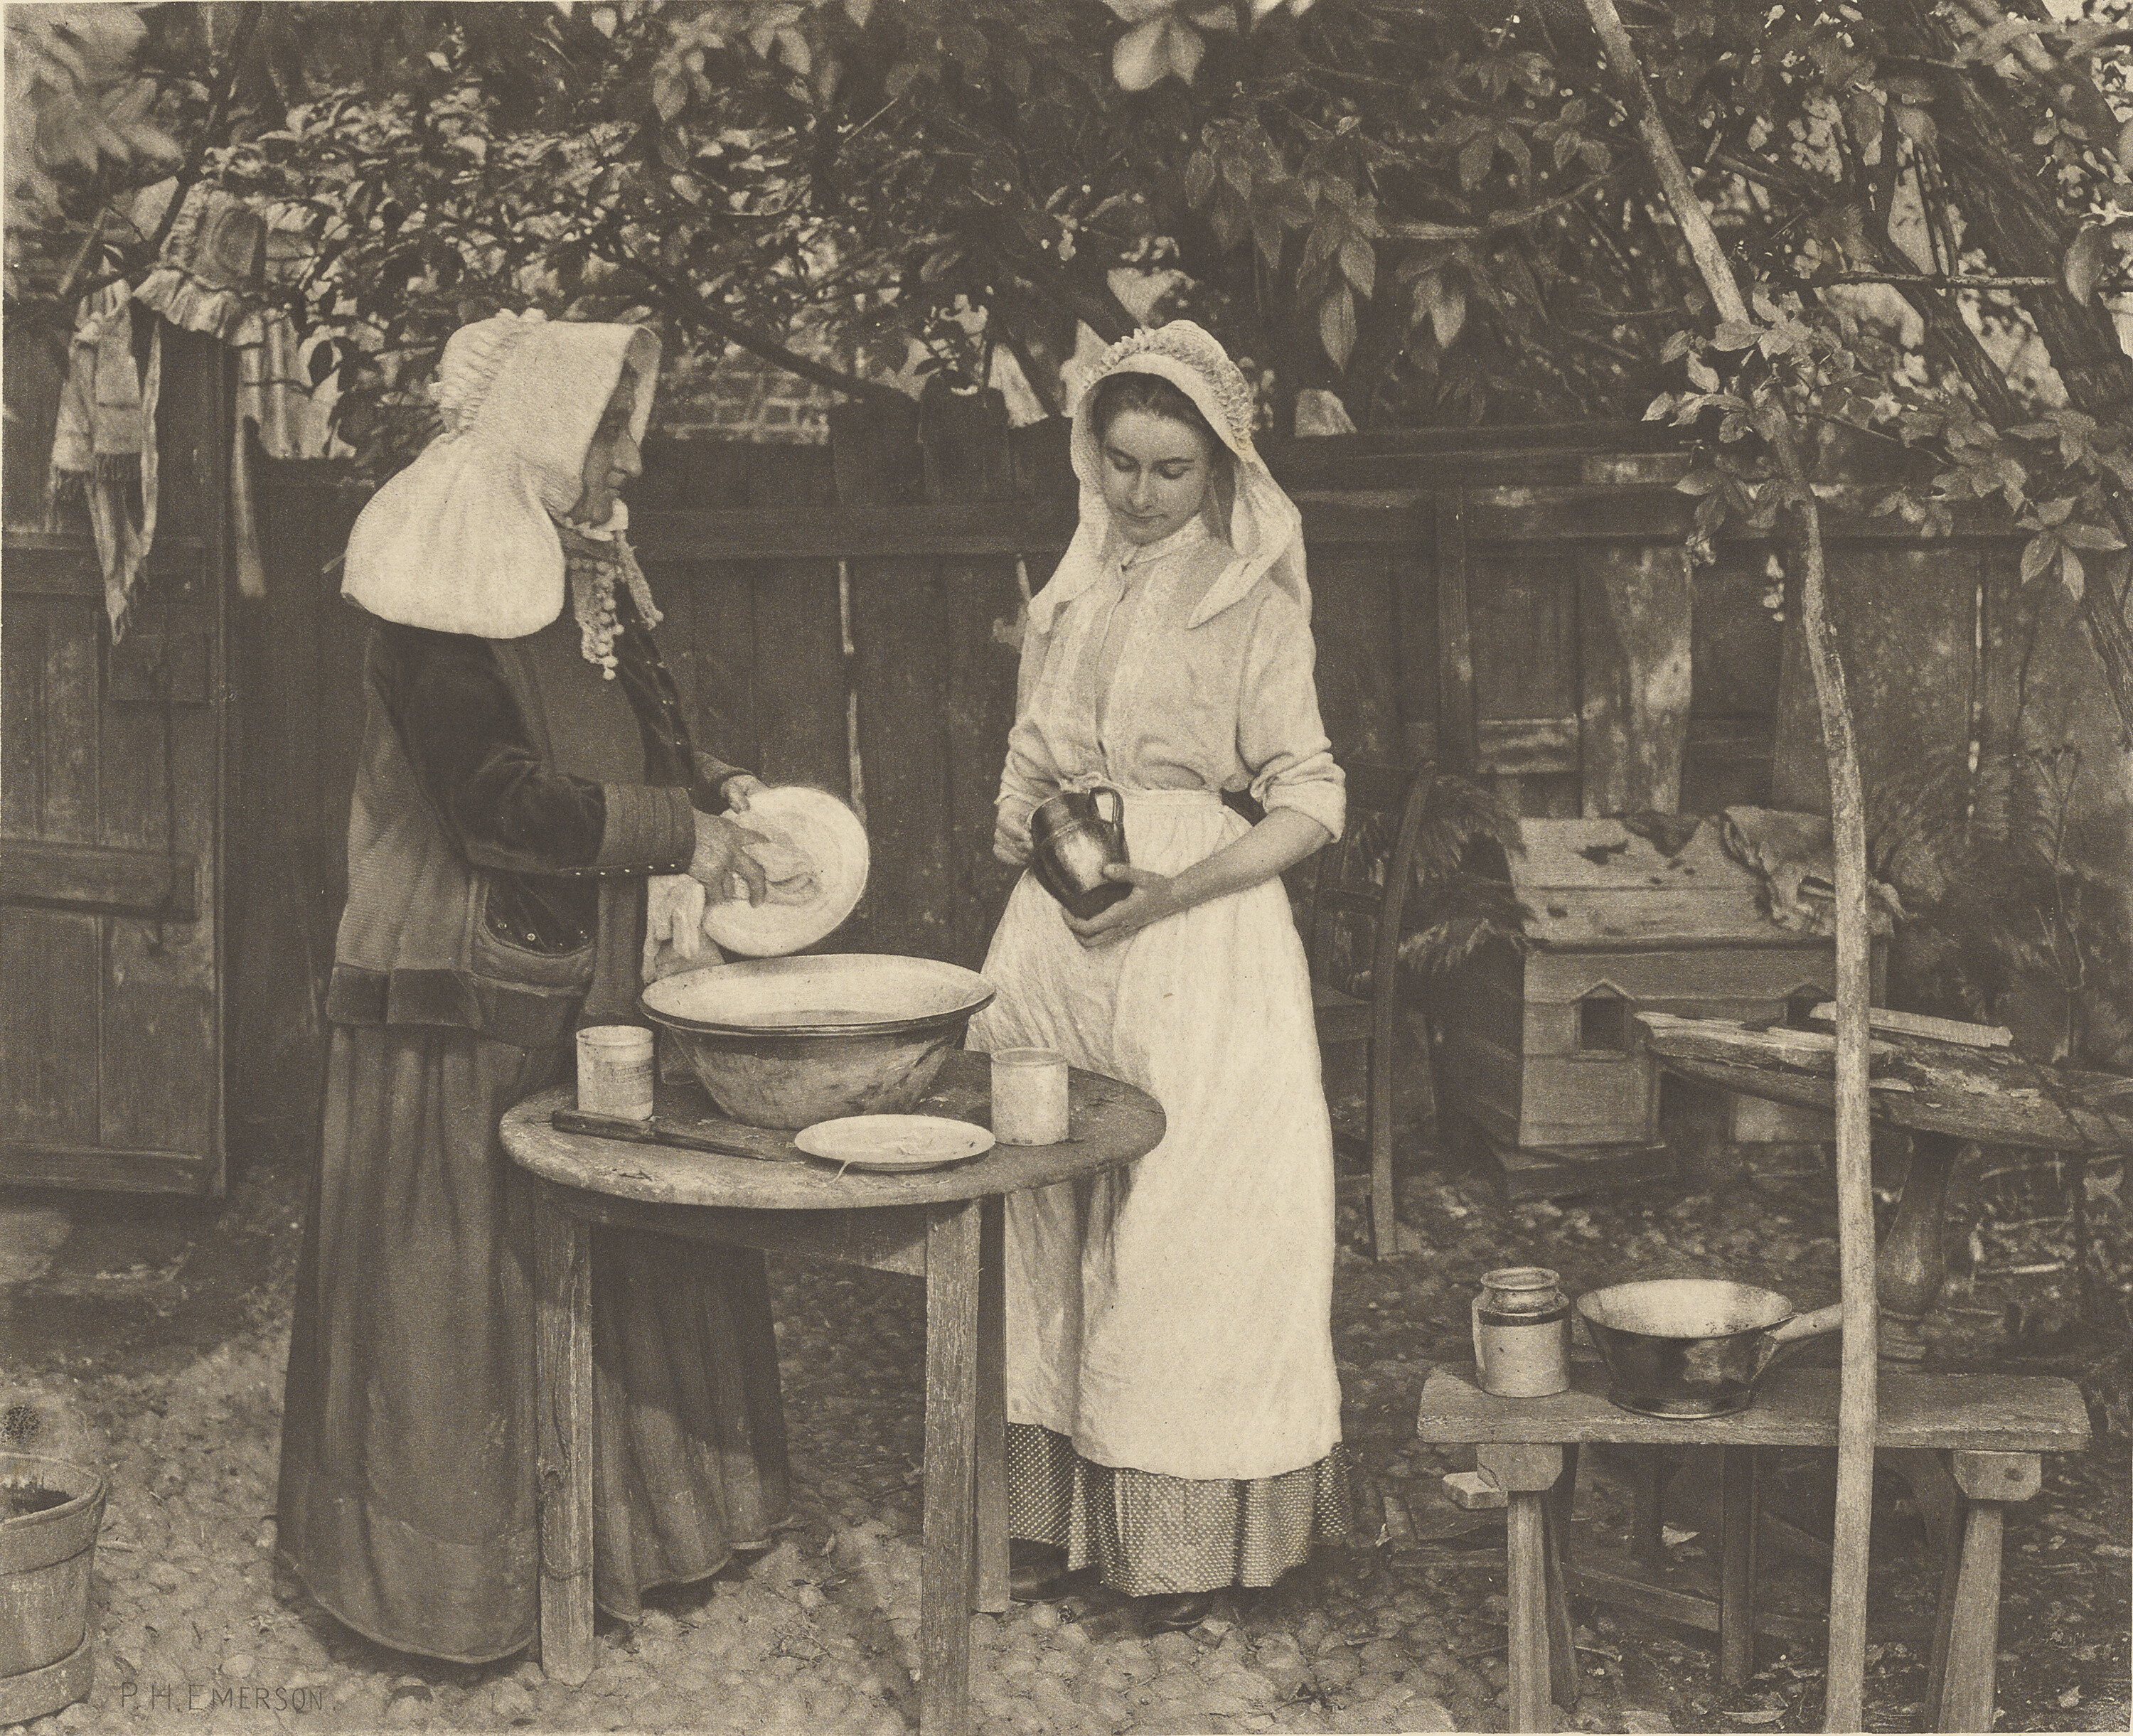 Мытьё посуды. Лондон, Англия, 1887. Фотограф Питер Генри Эмерсон